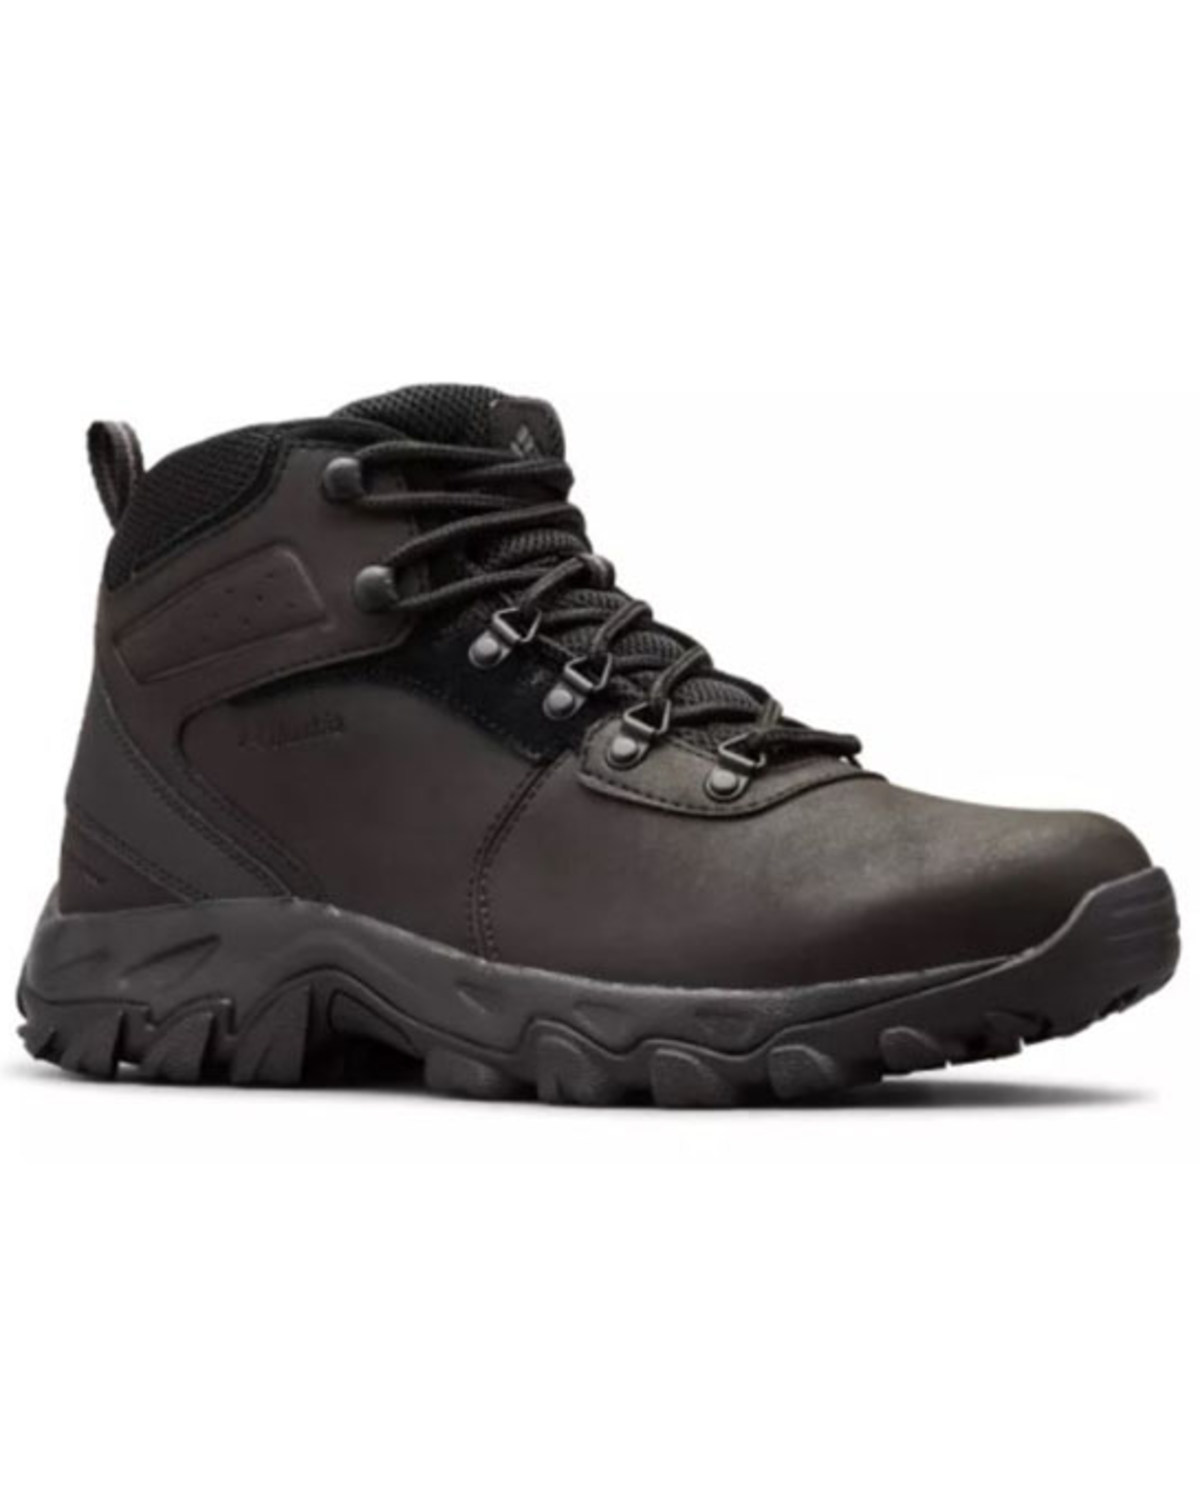 Columbia Men's Newton Ridge Black Waterproof Hiking Boots - Soft Toe